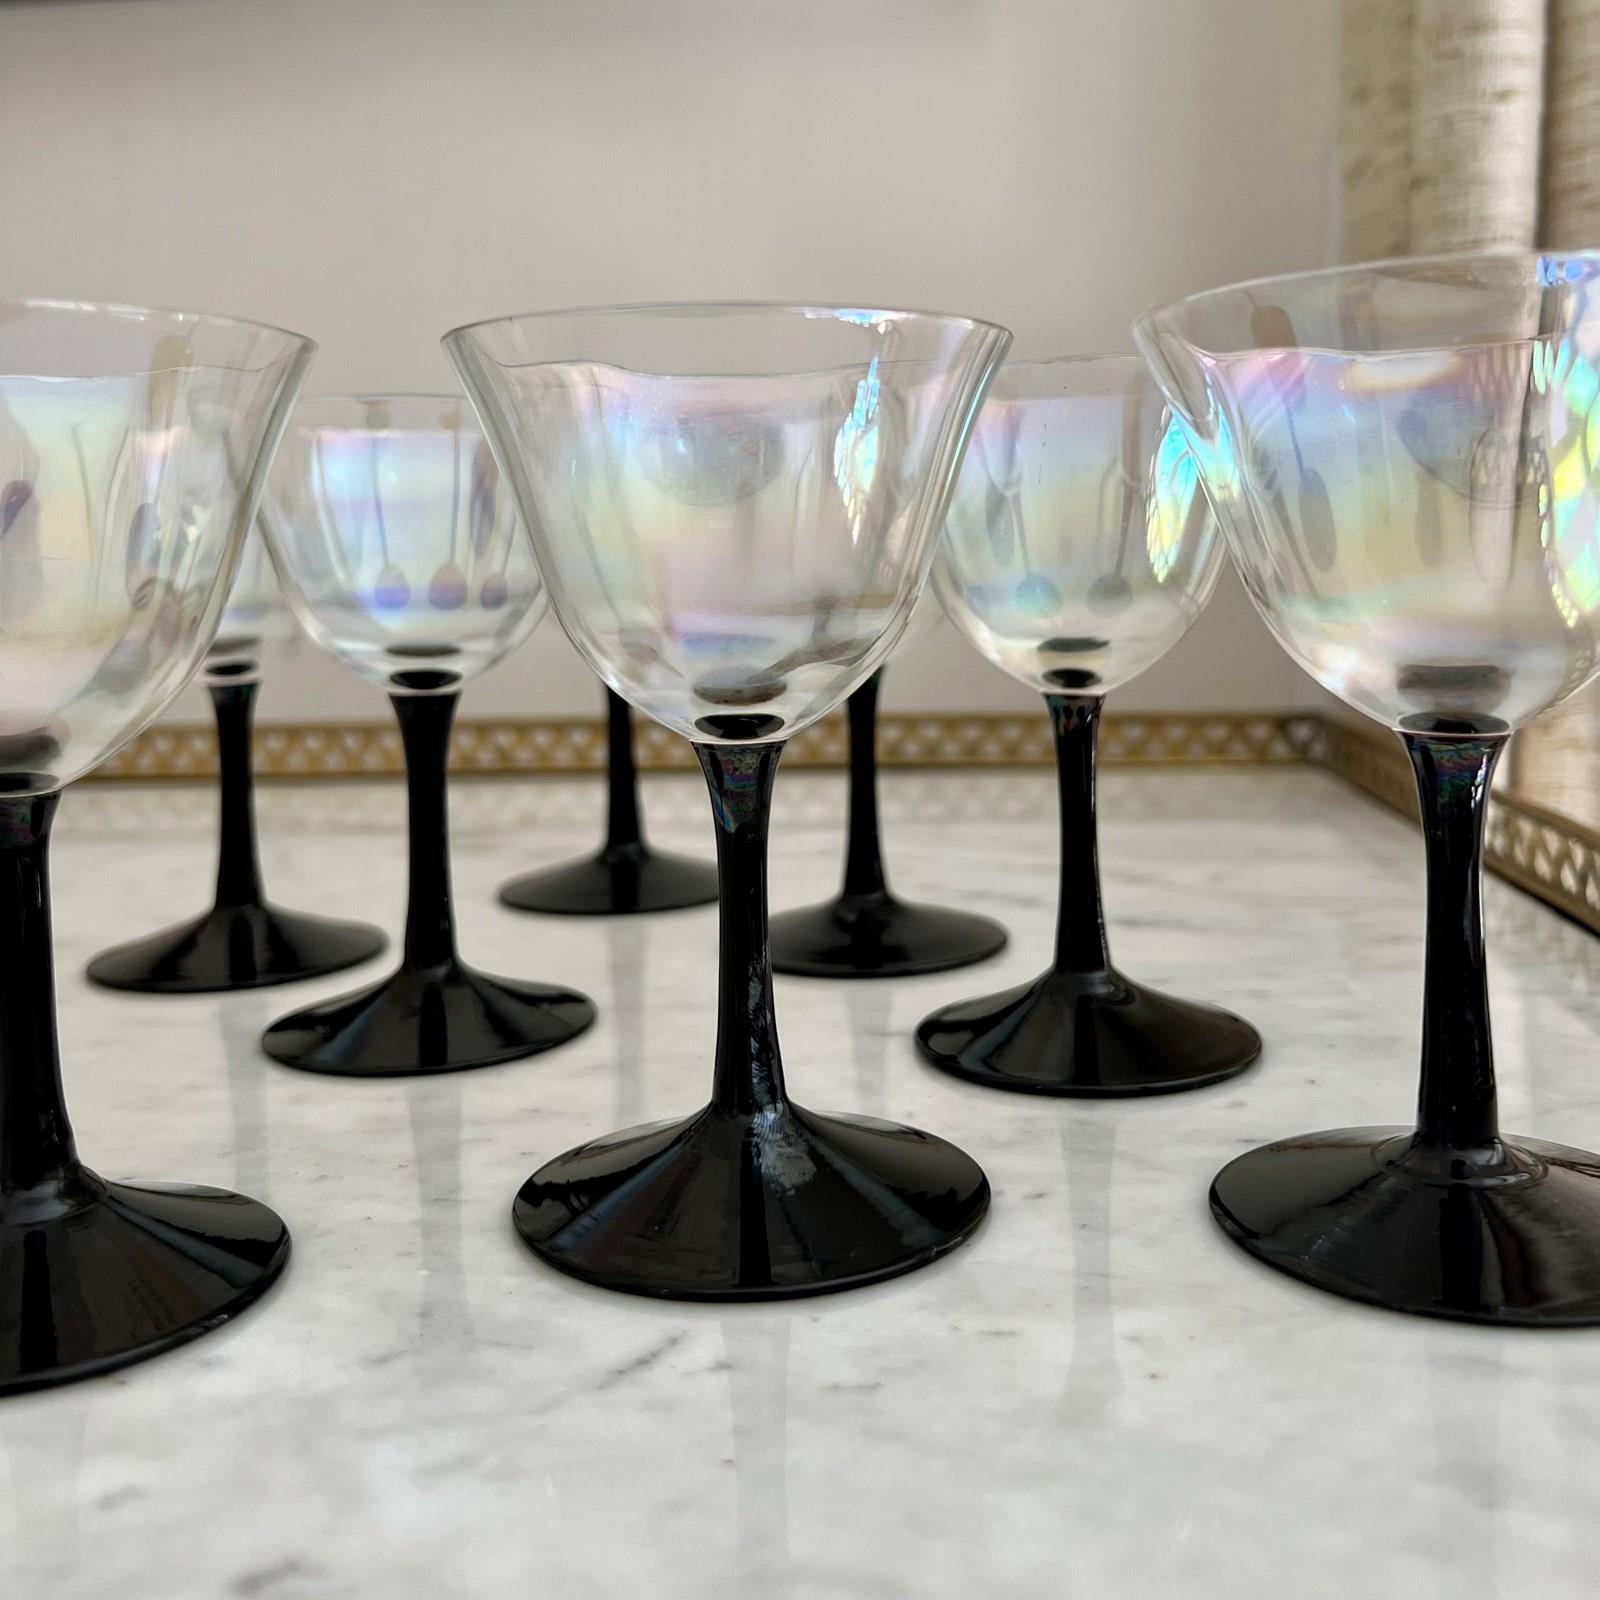 Symphony swirl optic pattern drinking glasses set of 8, vintage